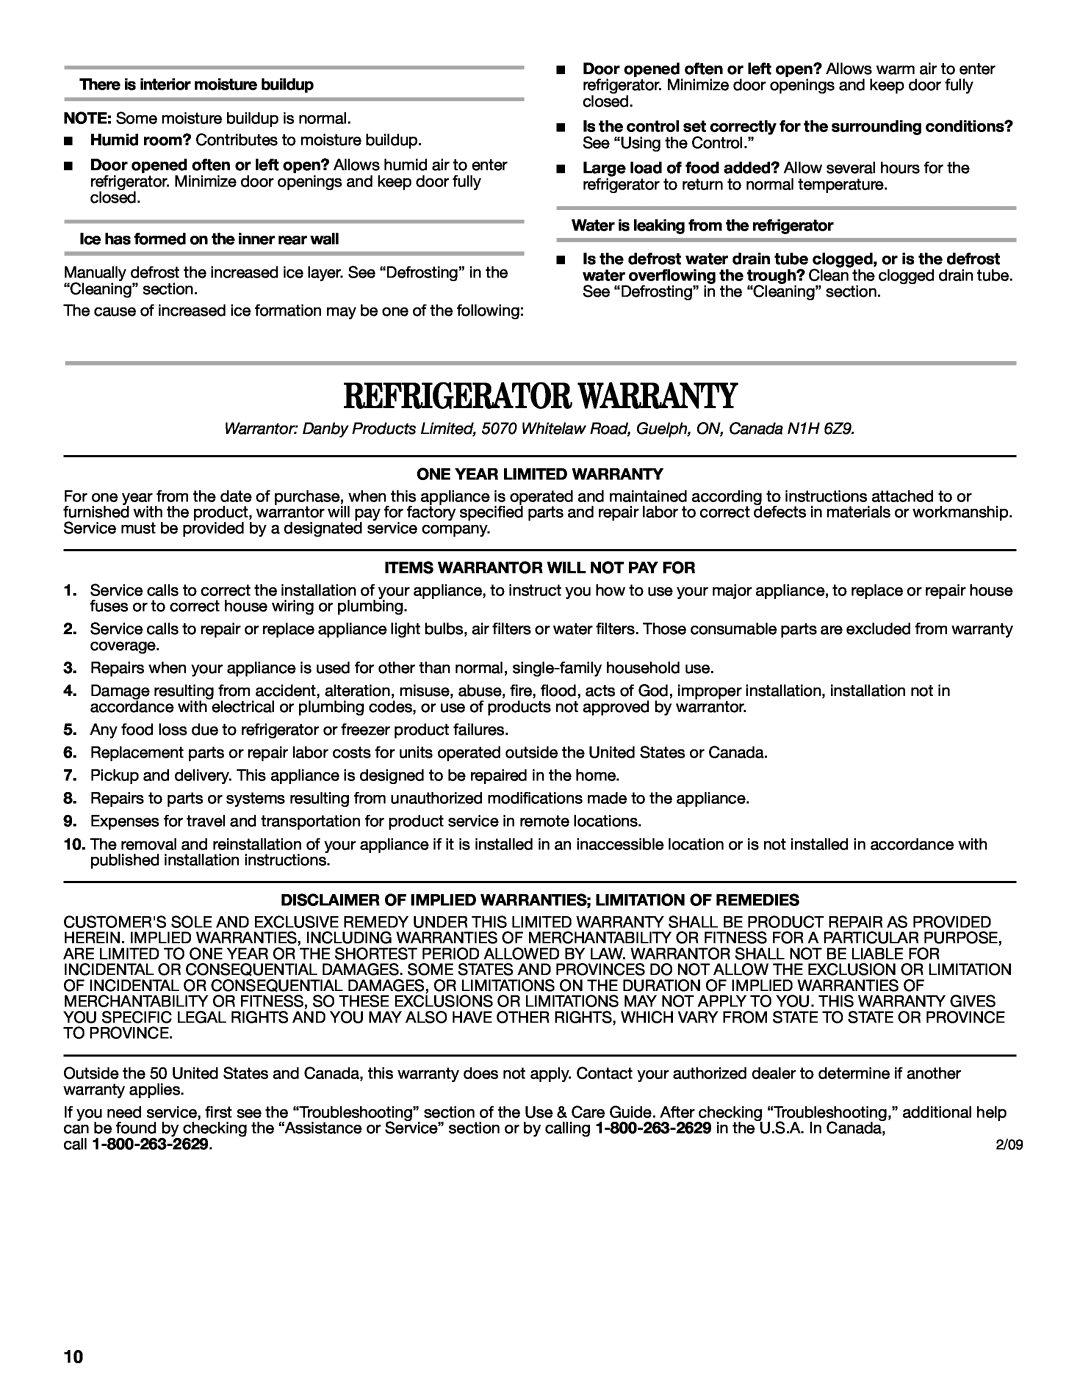 Whirlpool WAR449W manual Refrigerator Warranty 